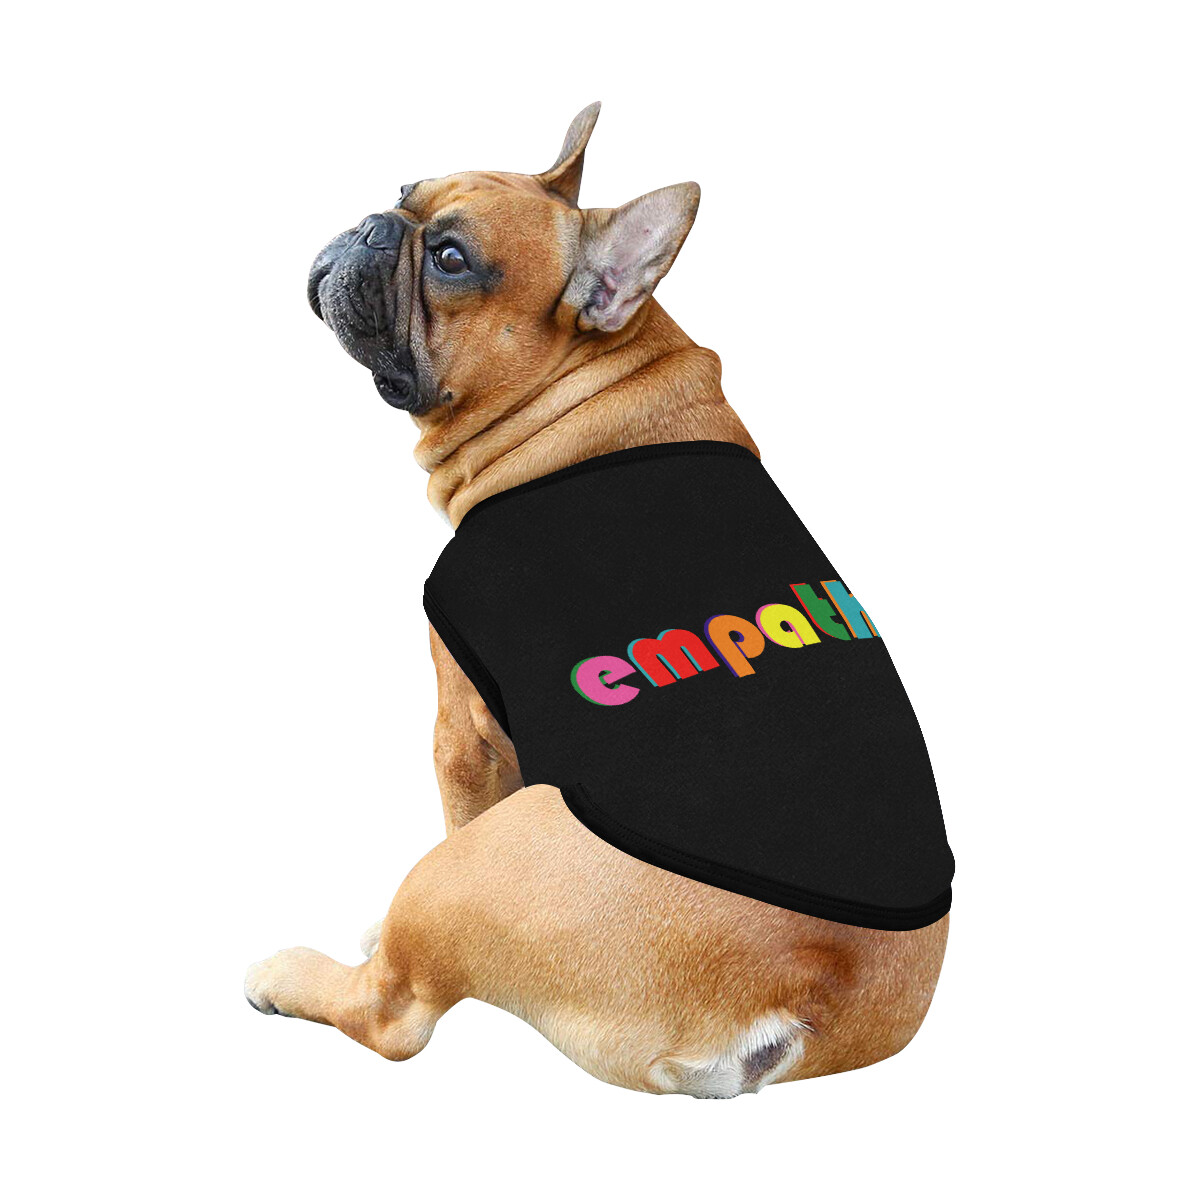 🐕 EMPATHY Dog Tank Top, Dog shirt, Dog clothes, Gifts, front back print, 7 sizes XS to 3XL, dog t-shirt, dog gift, black